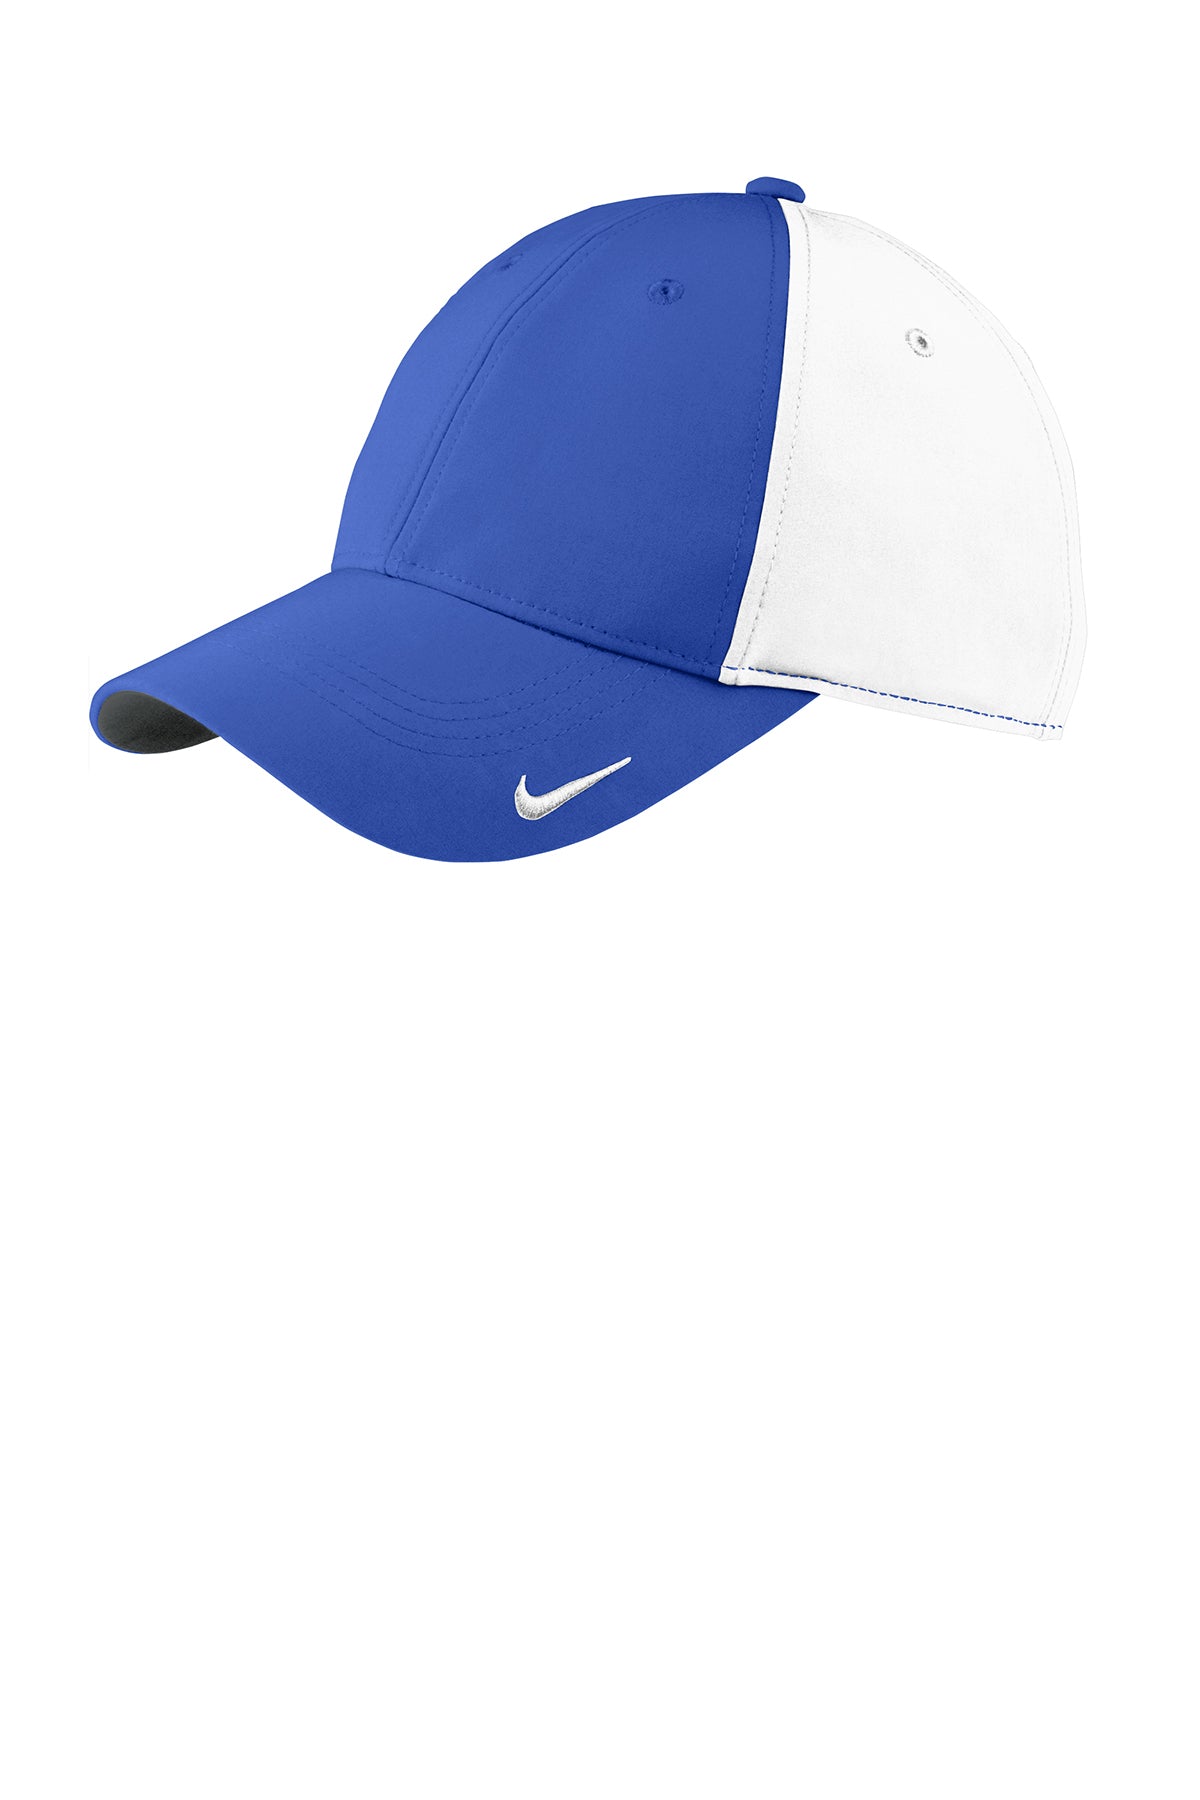 Nike Dri-FIT Legacy Customized Caps, Game Royal